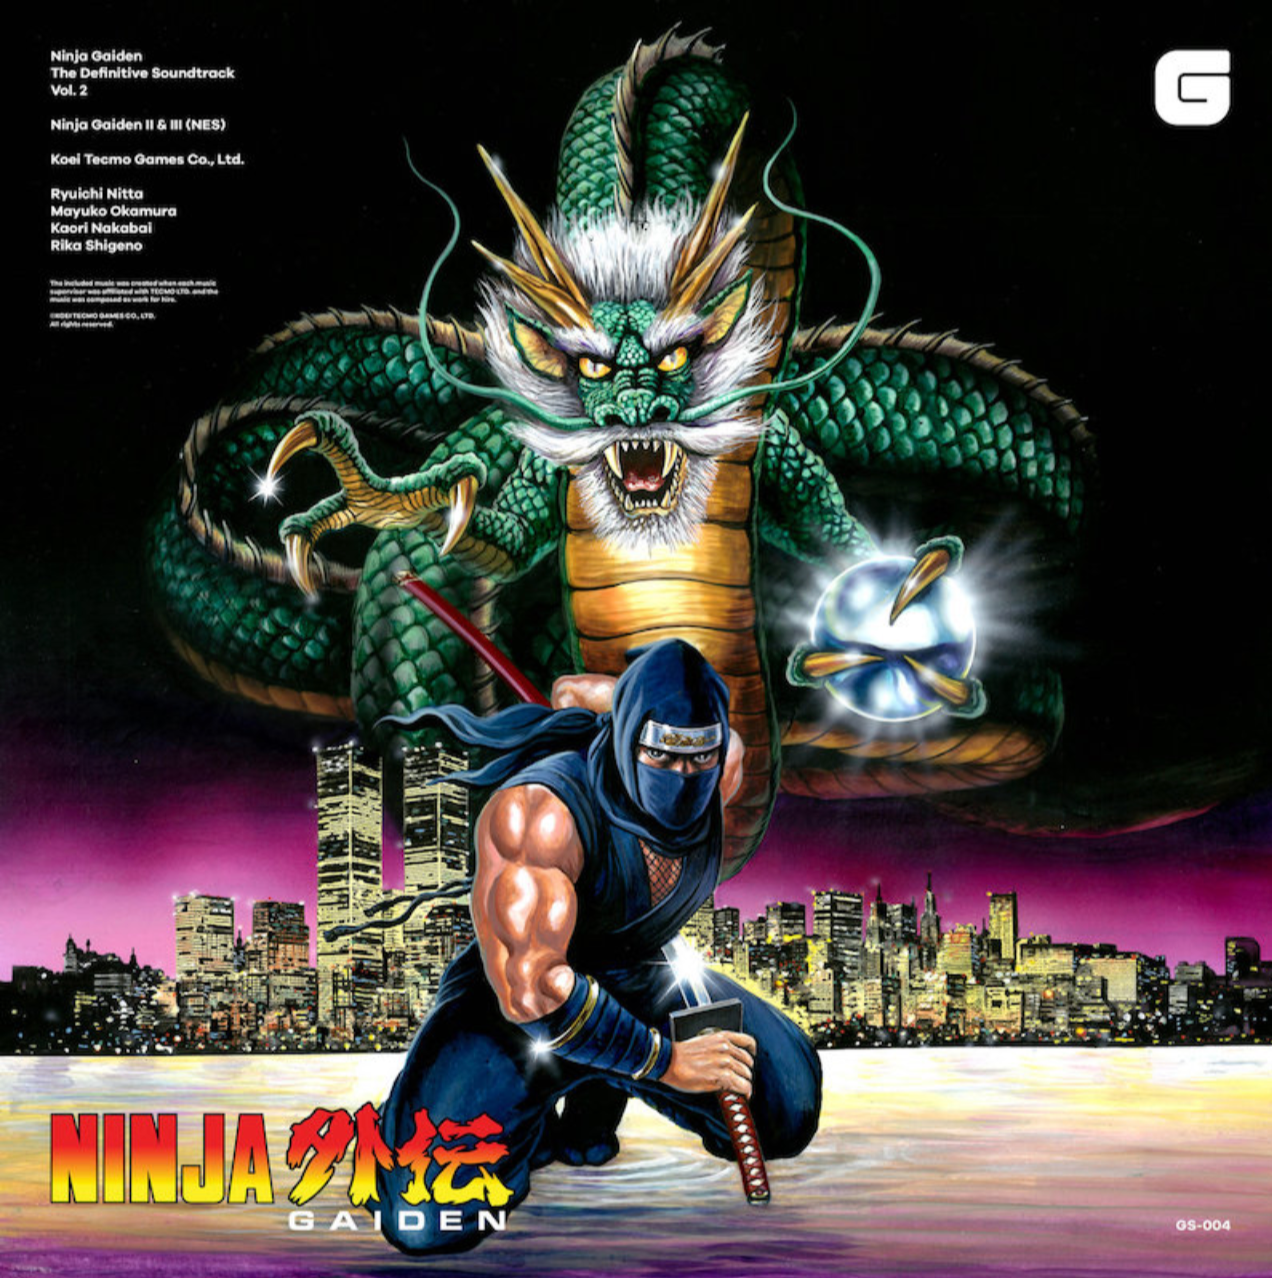 Ninja Gaiden The Definitive Soundtrack Vol. 2 - CD